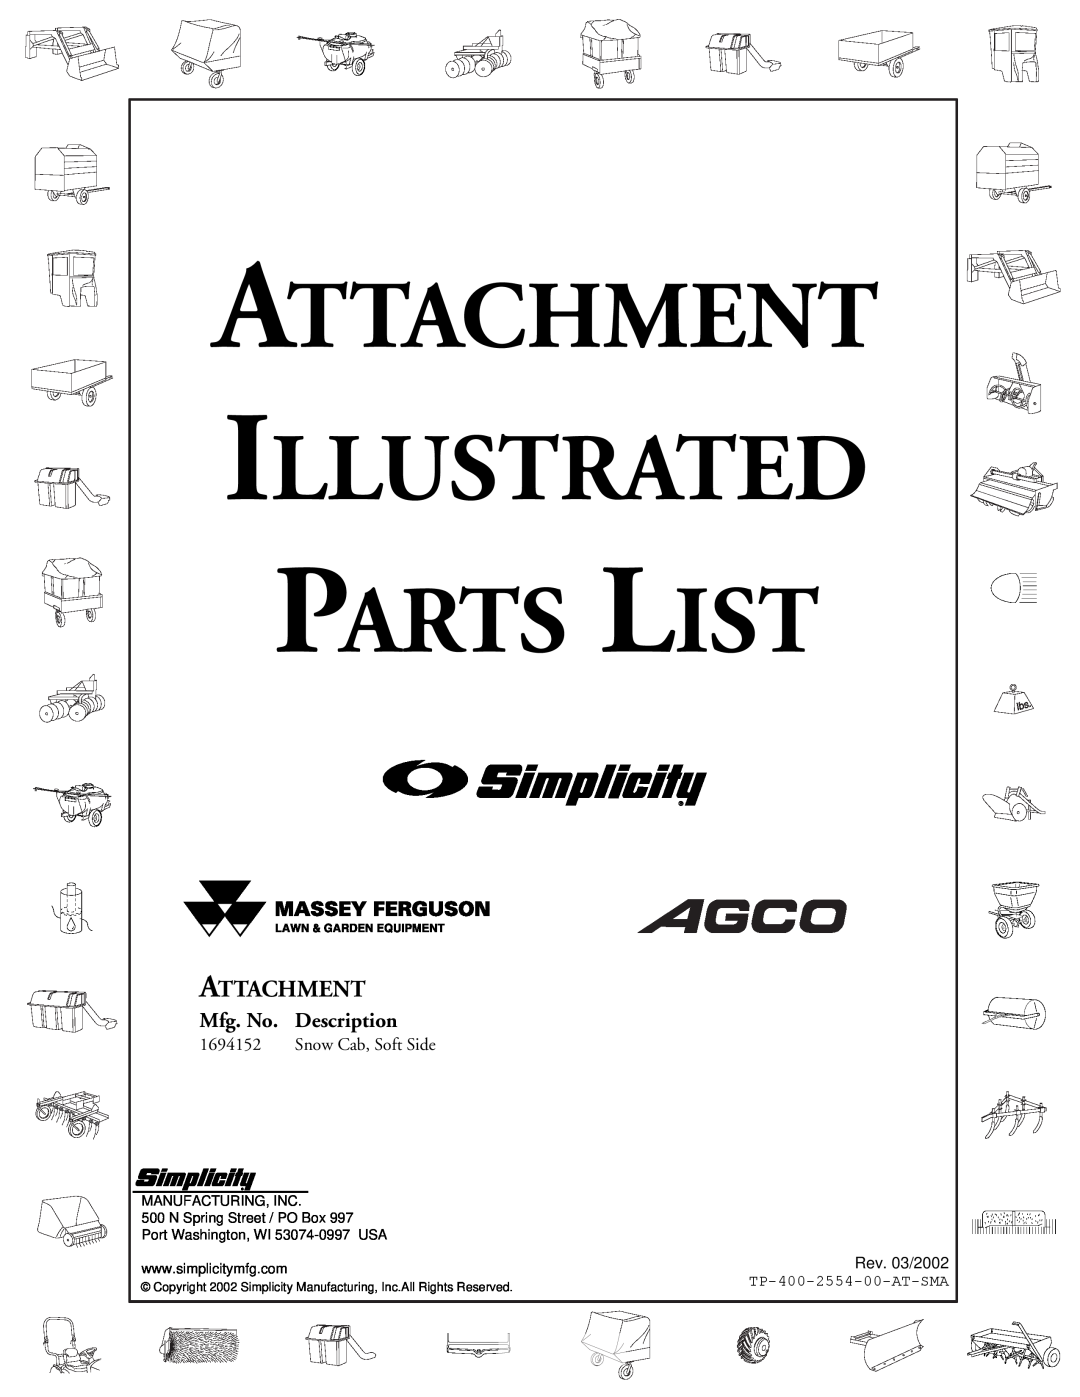 Simplicity 1694152 manual Rev. 03/2002, TP-400-2554-00-AT-SMA, Attachment Illustrated Parts List, Mfg. No. Description 